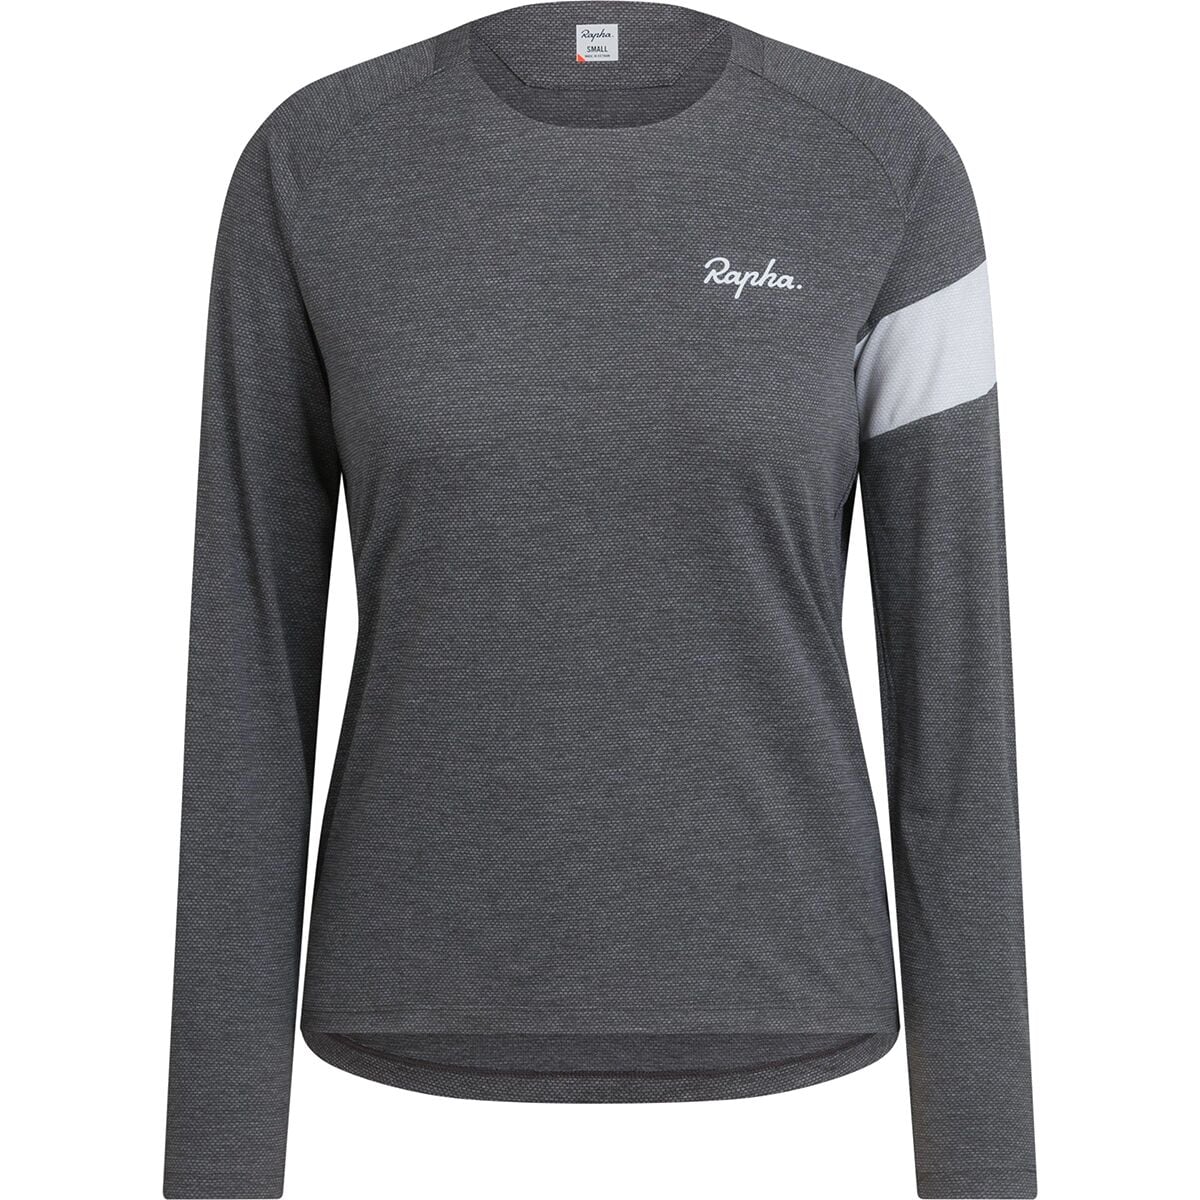 Rapha Trail Long-Sleeve Technical T-Shirt - Women's Grey/Light Grey, XS